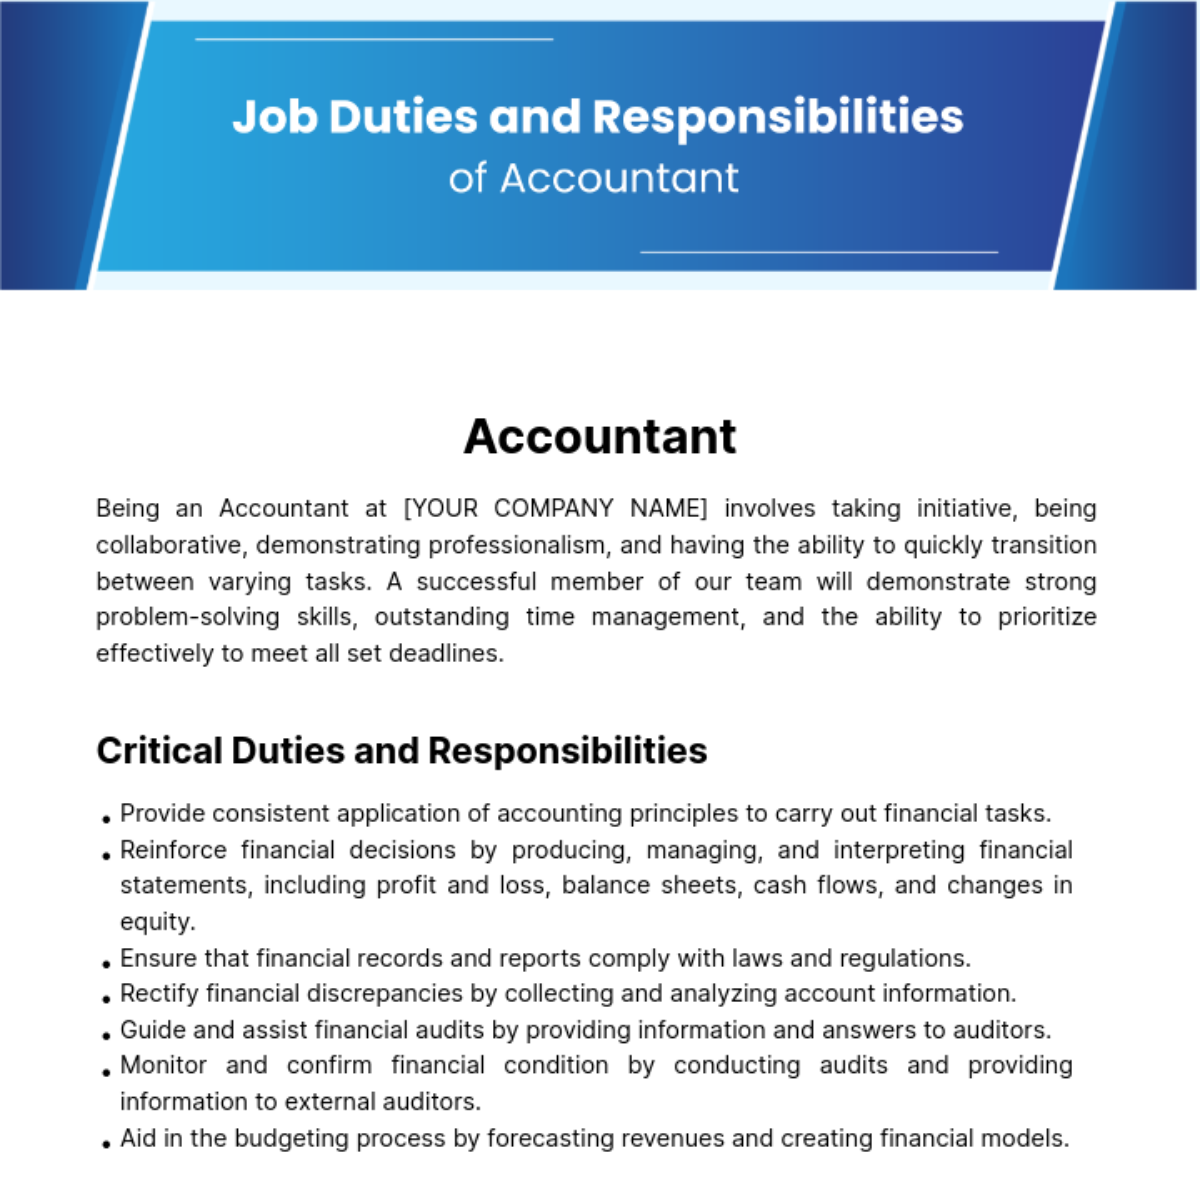 Job Duties and Responsibilities of Accountant Template